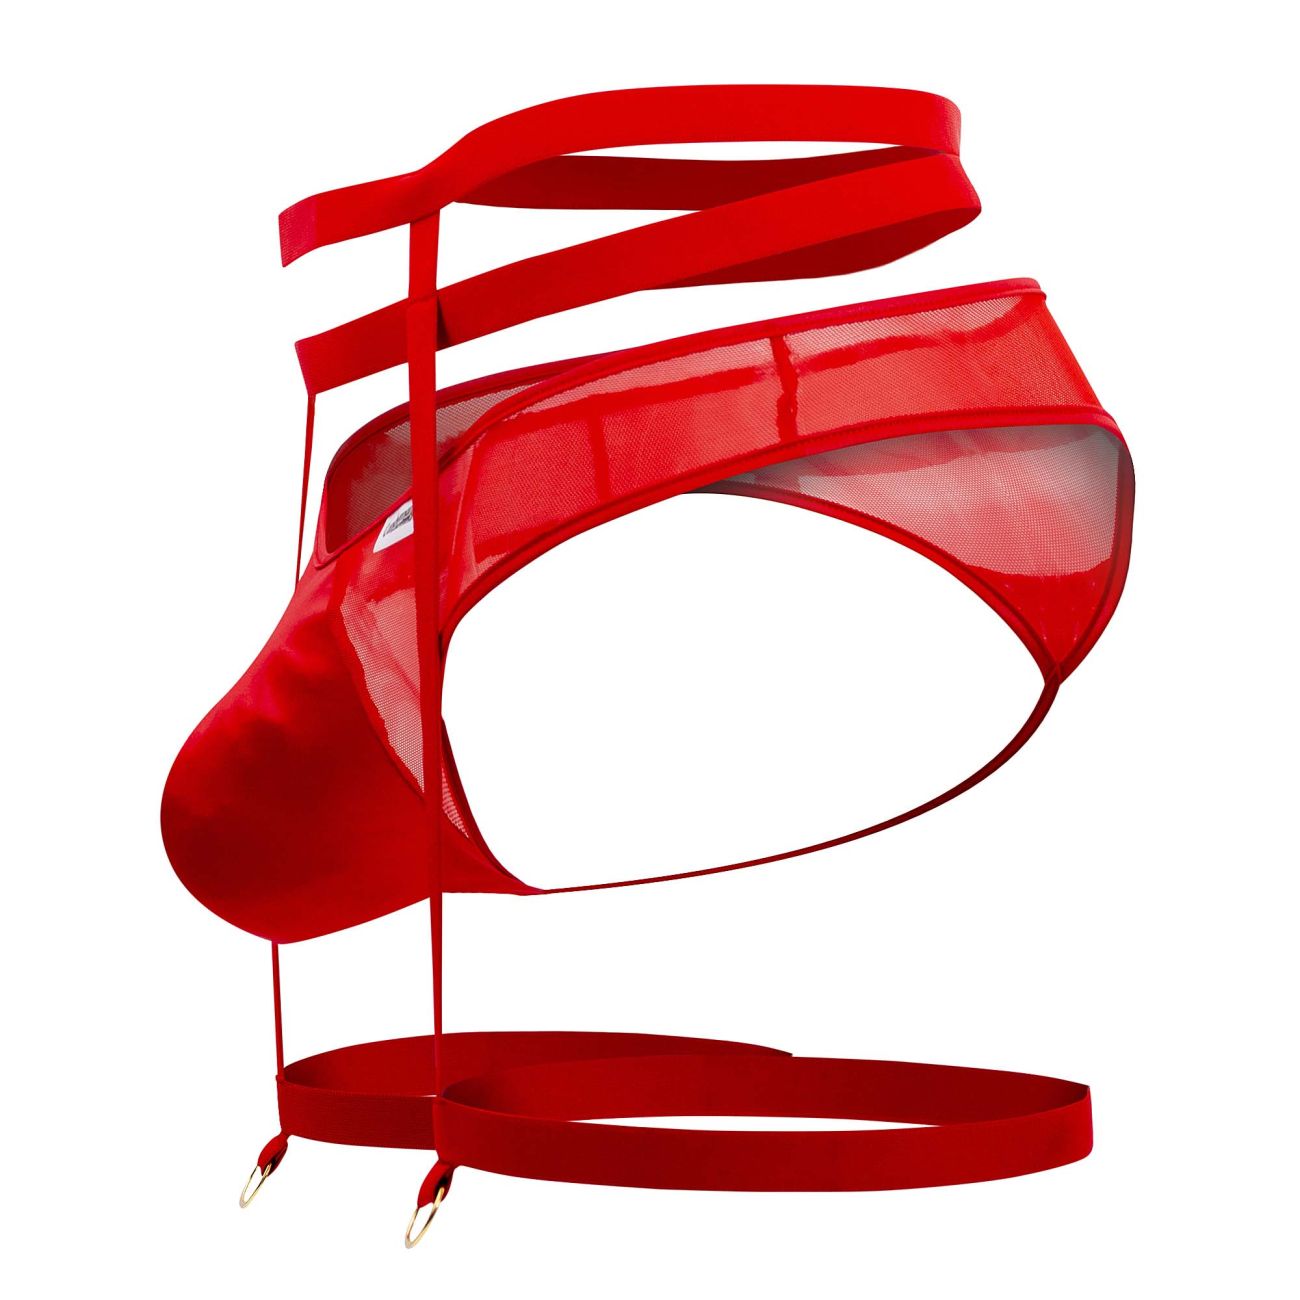 JCSTK - CandyMan 99677 Garter Thongs Two Piece Set Red